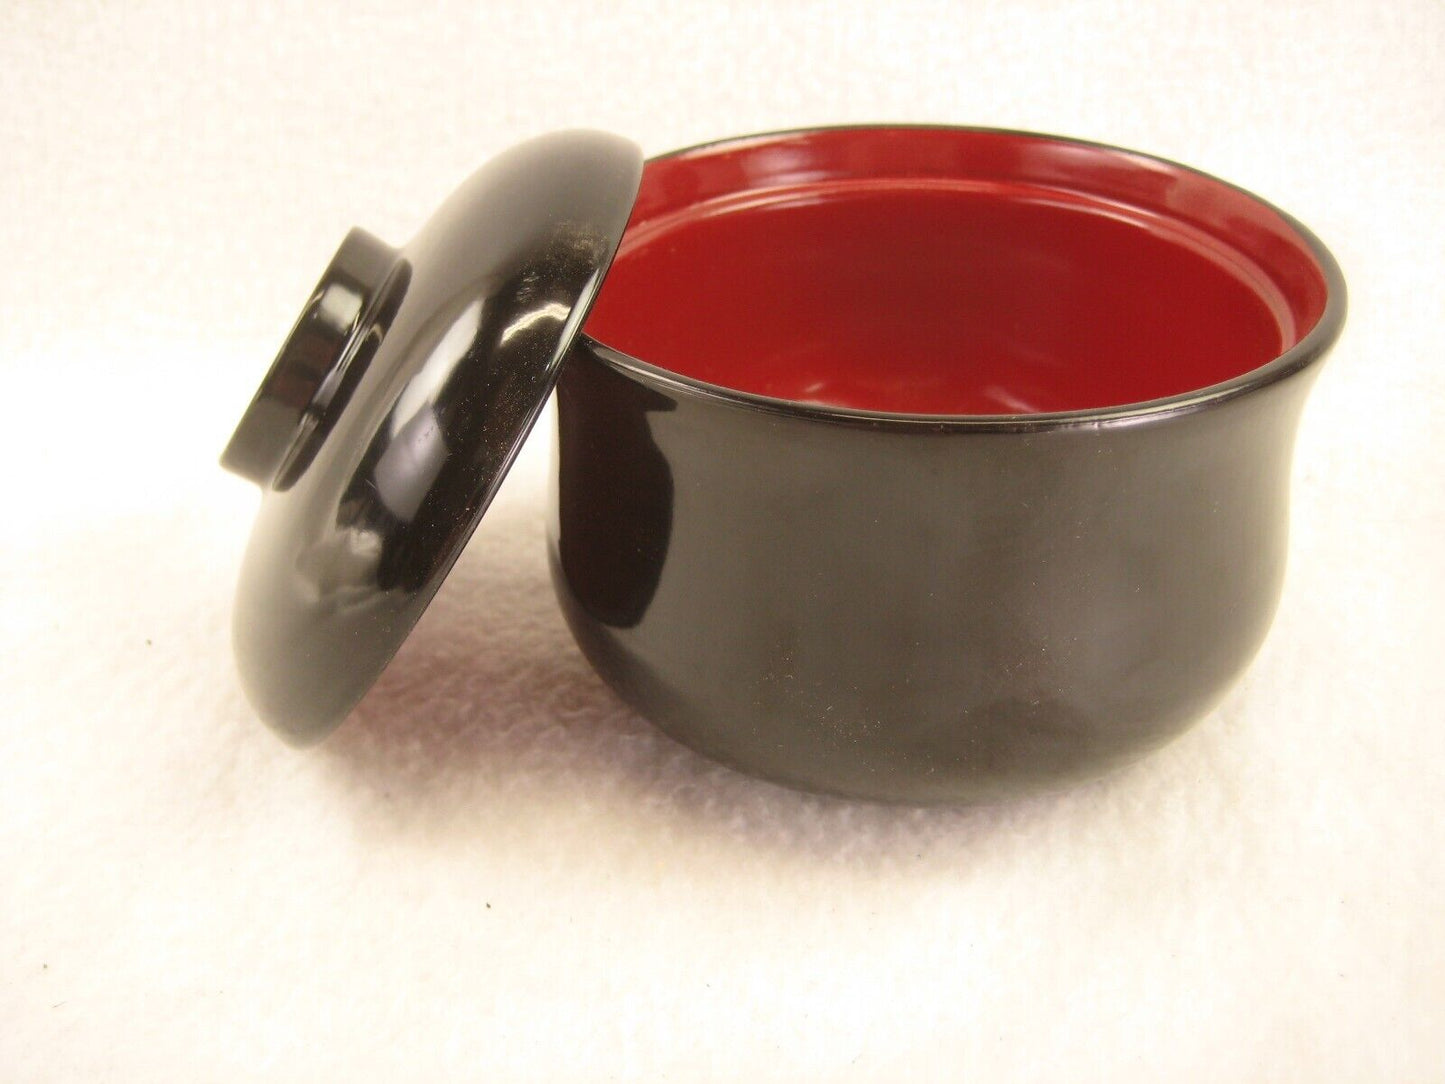 Antique Japanese Meiji Era (C.1910) Lacquer Wooden Lidded Soup / Rice Bowl Makie